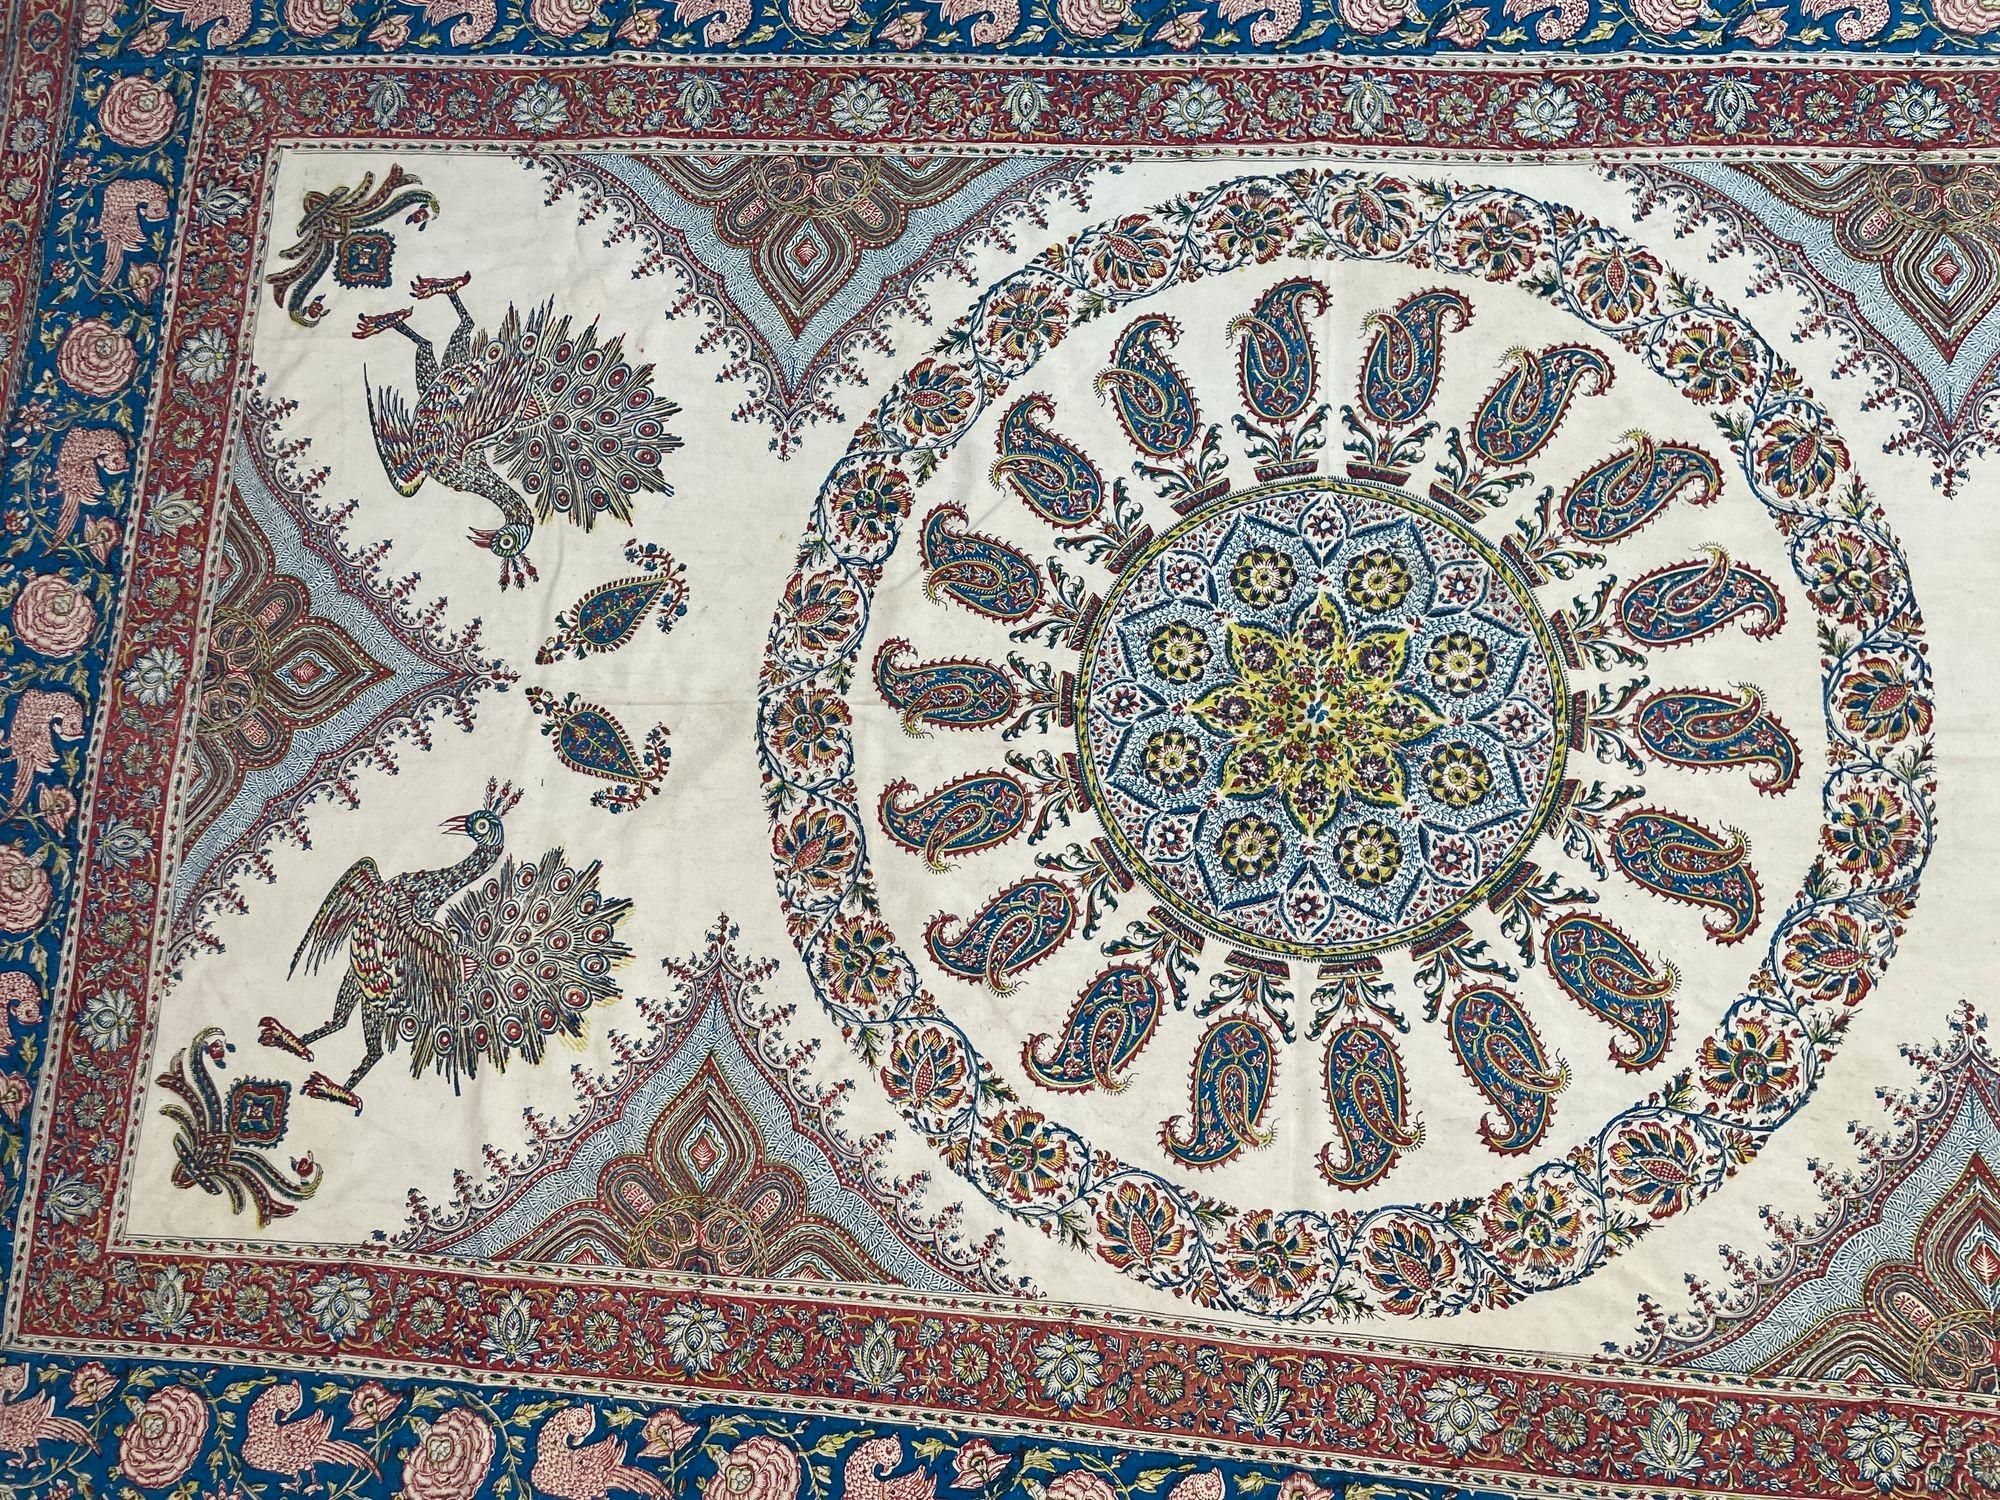 Large Isfahan Ghalamkar Persian Paisley Textile Block Printed 1950s For Sale 3